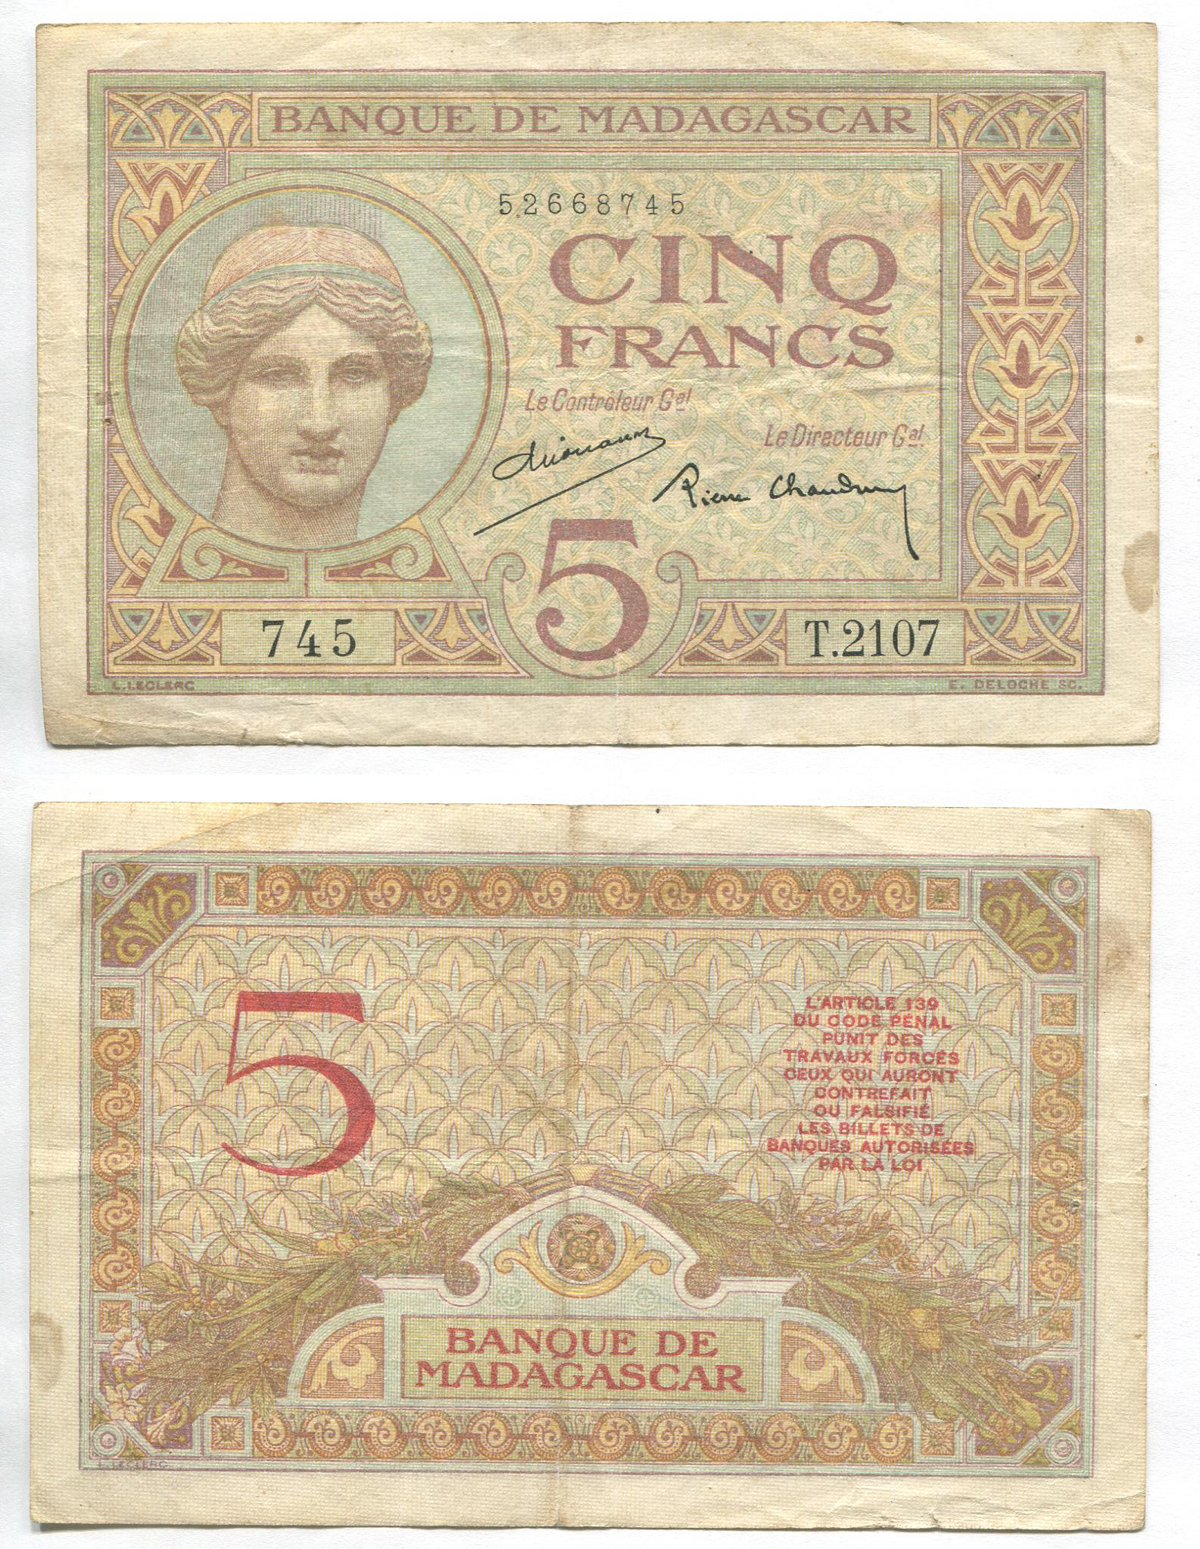 Мадагаскар. 5 франков. 1937 г. Pick № 35 # 745 T.2107